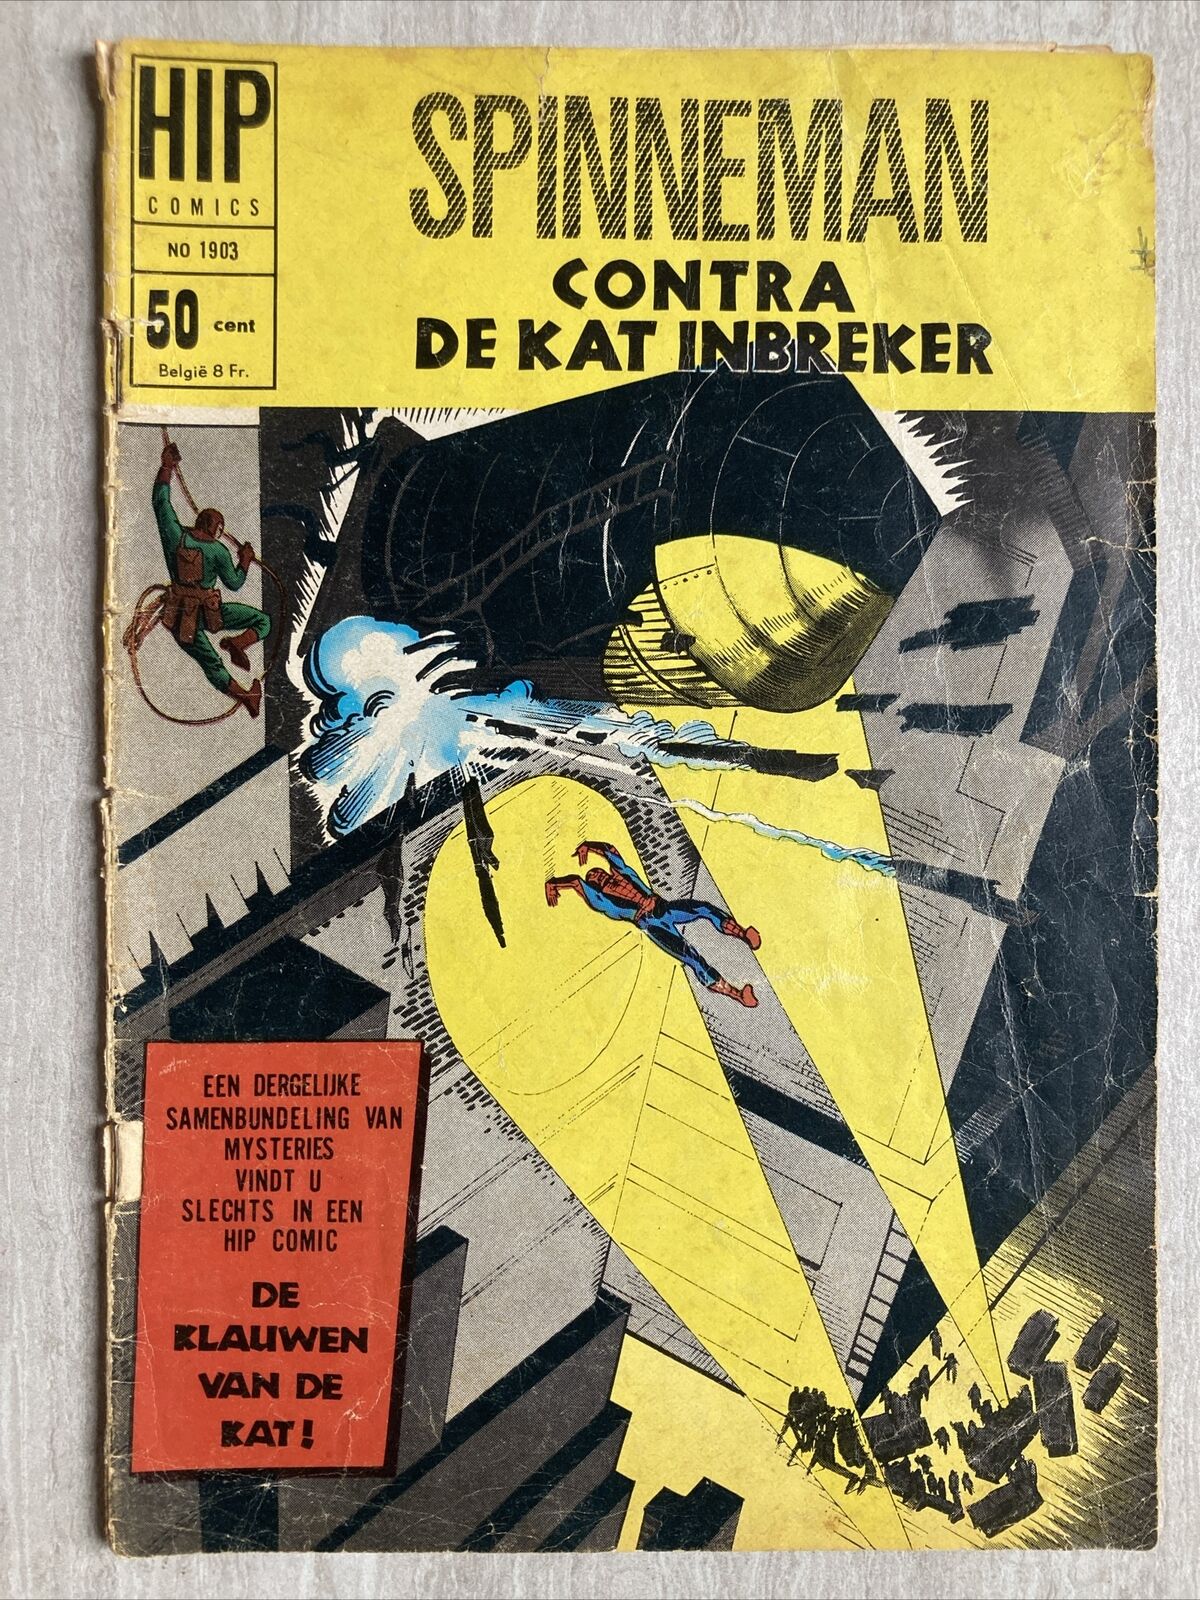 Amazing Spider-Man #30 Dutch Edition (1966 Hip Comics #1903)